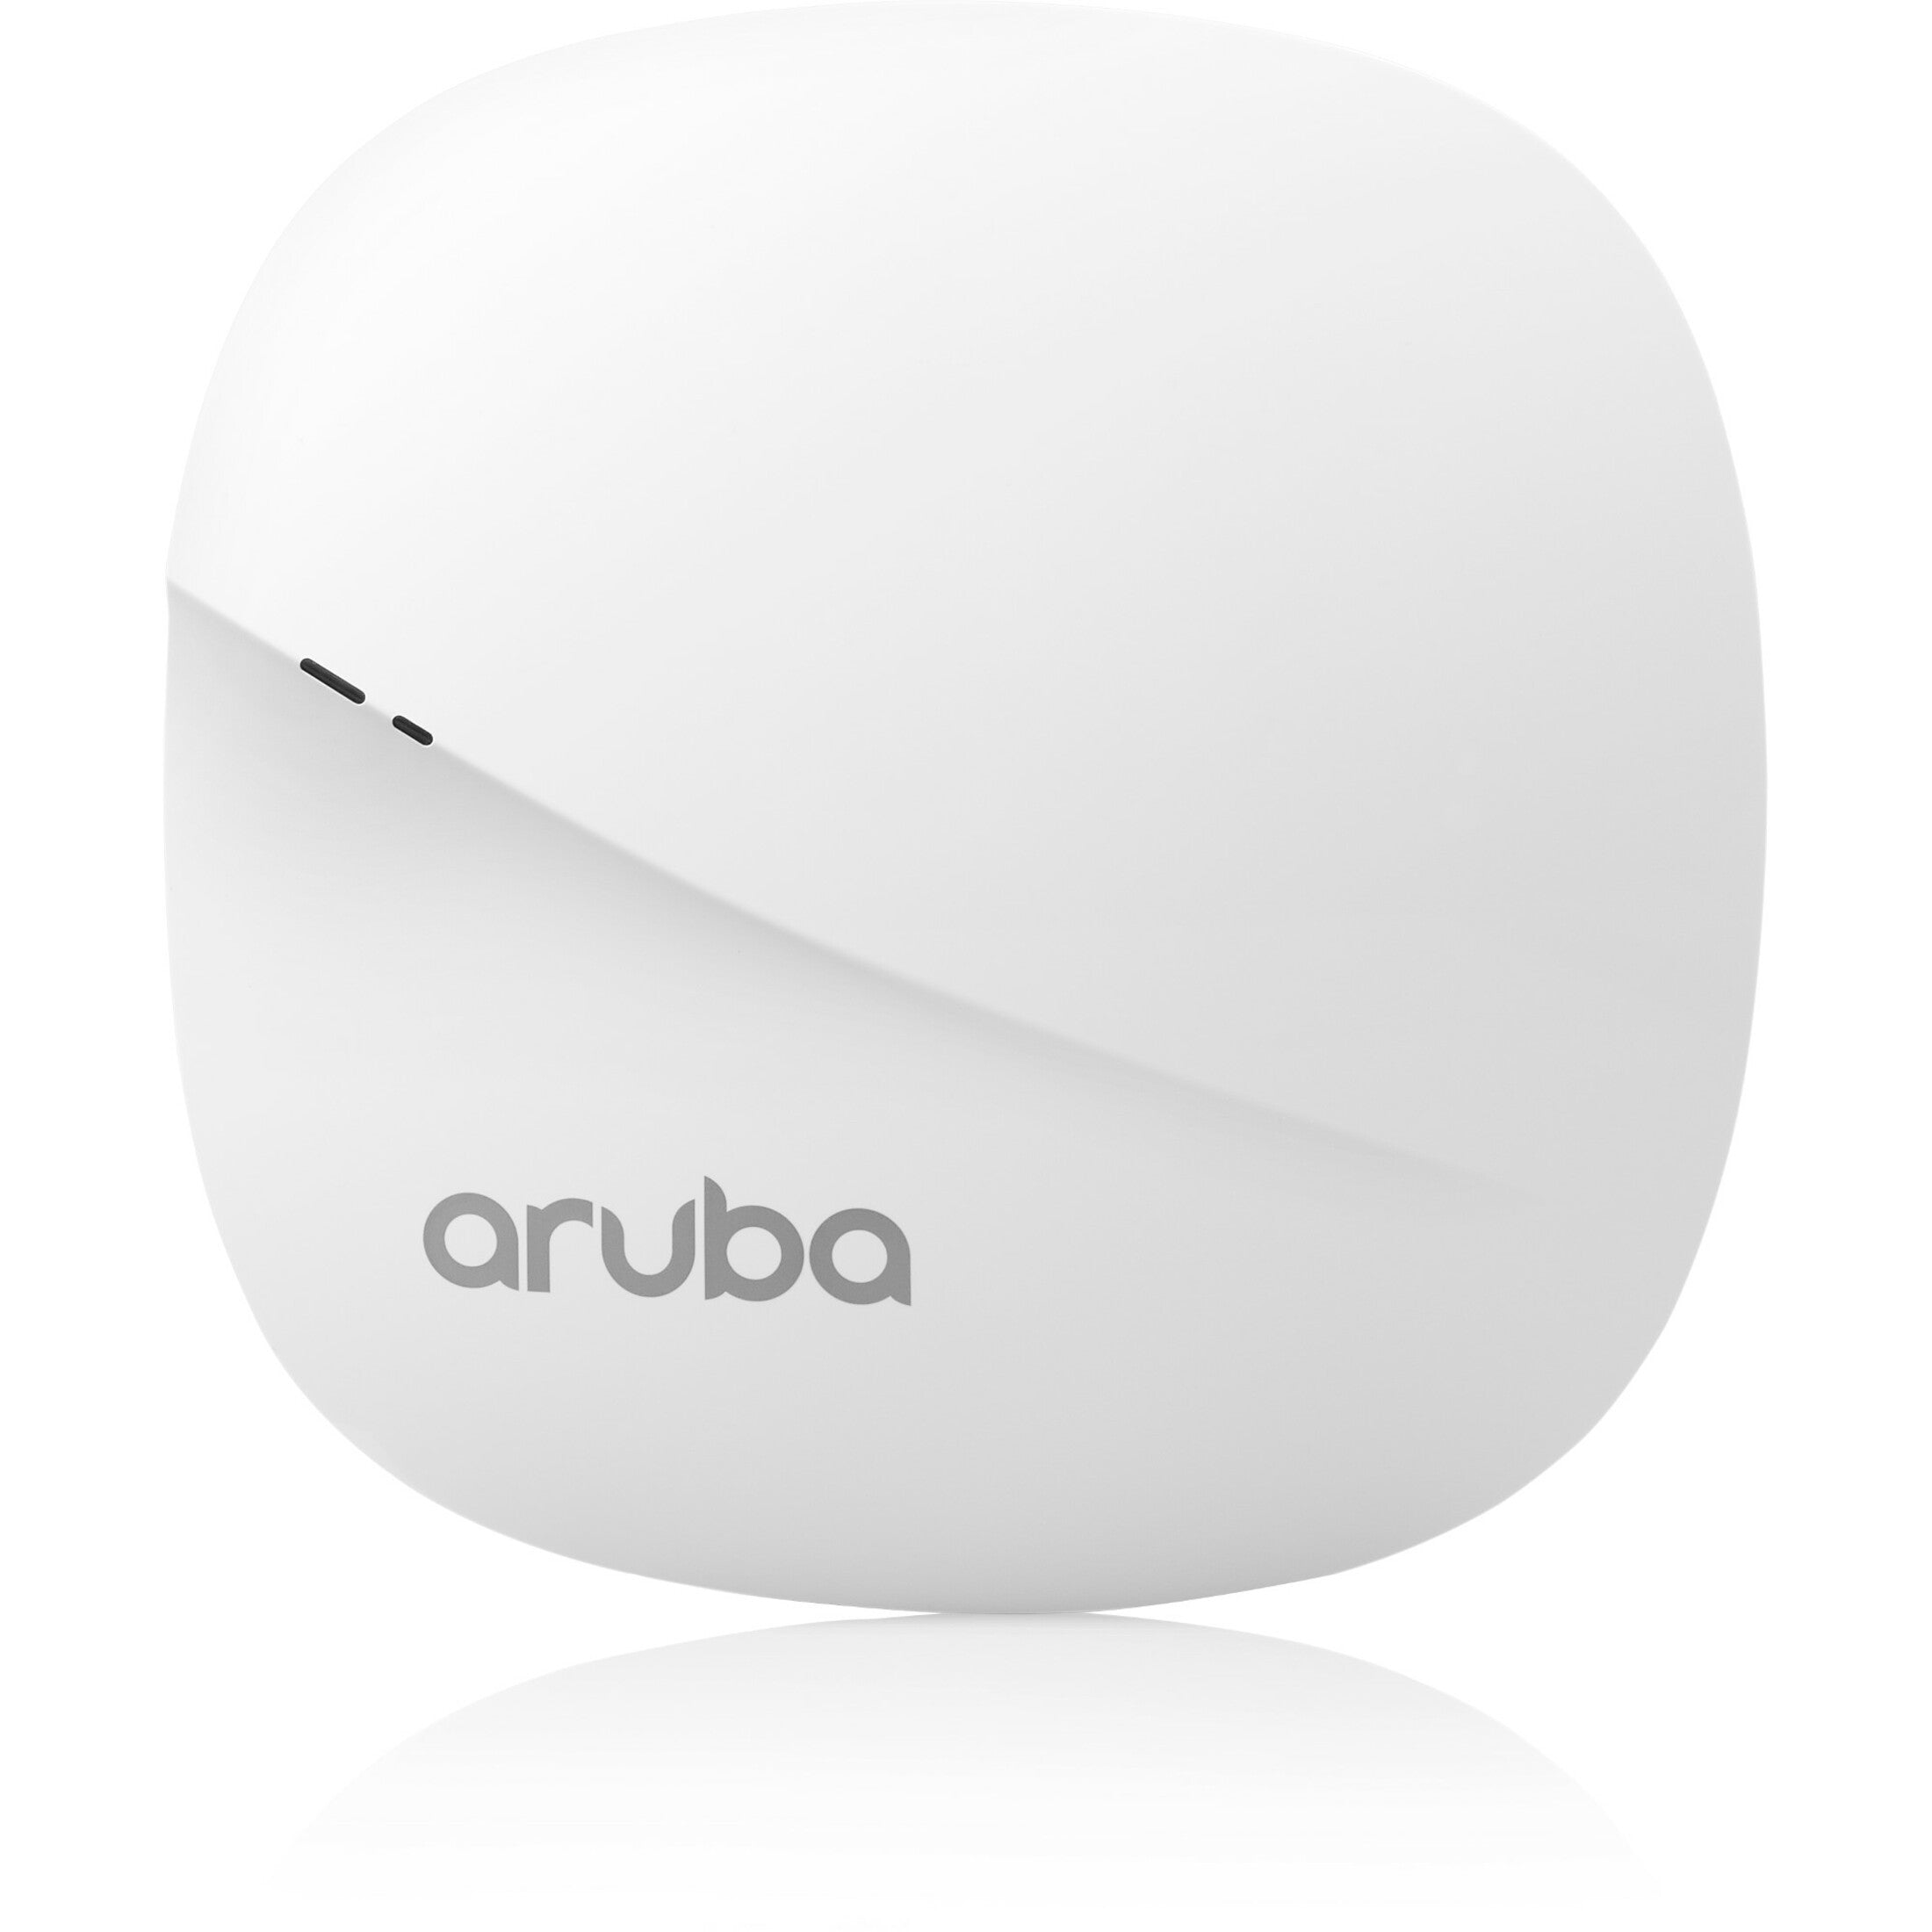 Aruba JZ321A AP-303 Wireless Access Point, 1.20 Gbit/s, Gigabit Ethernet